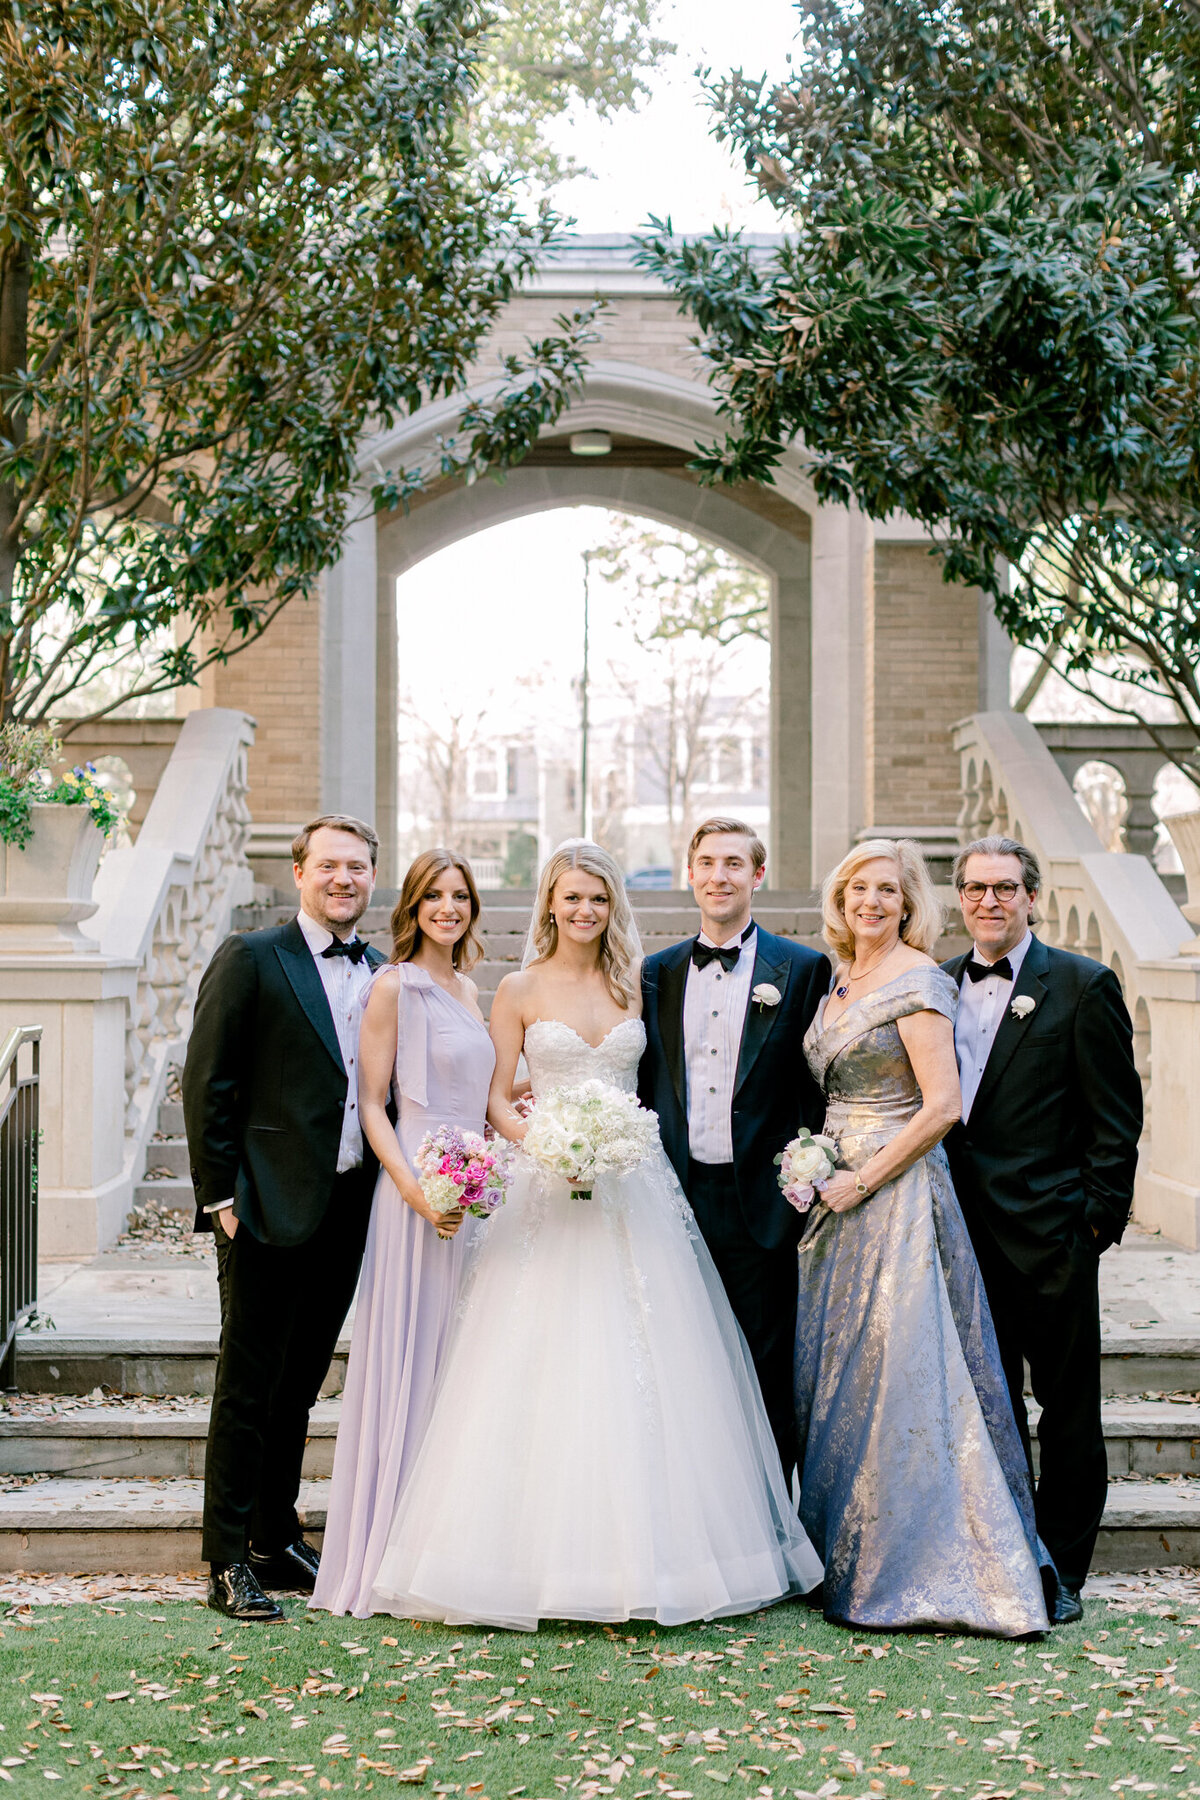 Shelby & Thomas's Wedding at HPUMC The Room on Main | Dallas Wedding Photographer | Sami Kathryn Photography-141